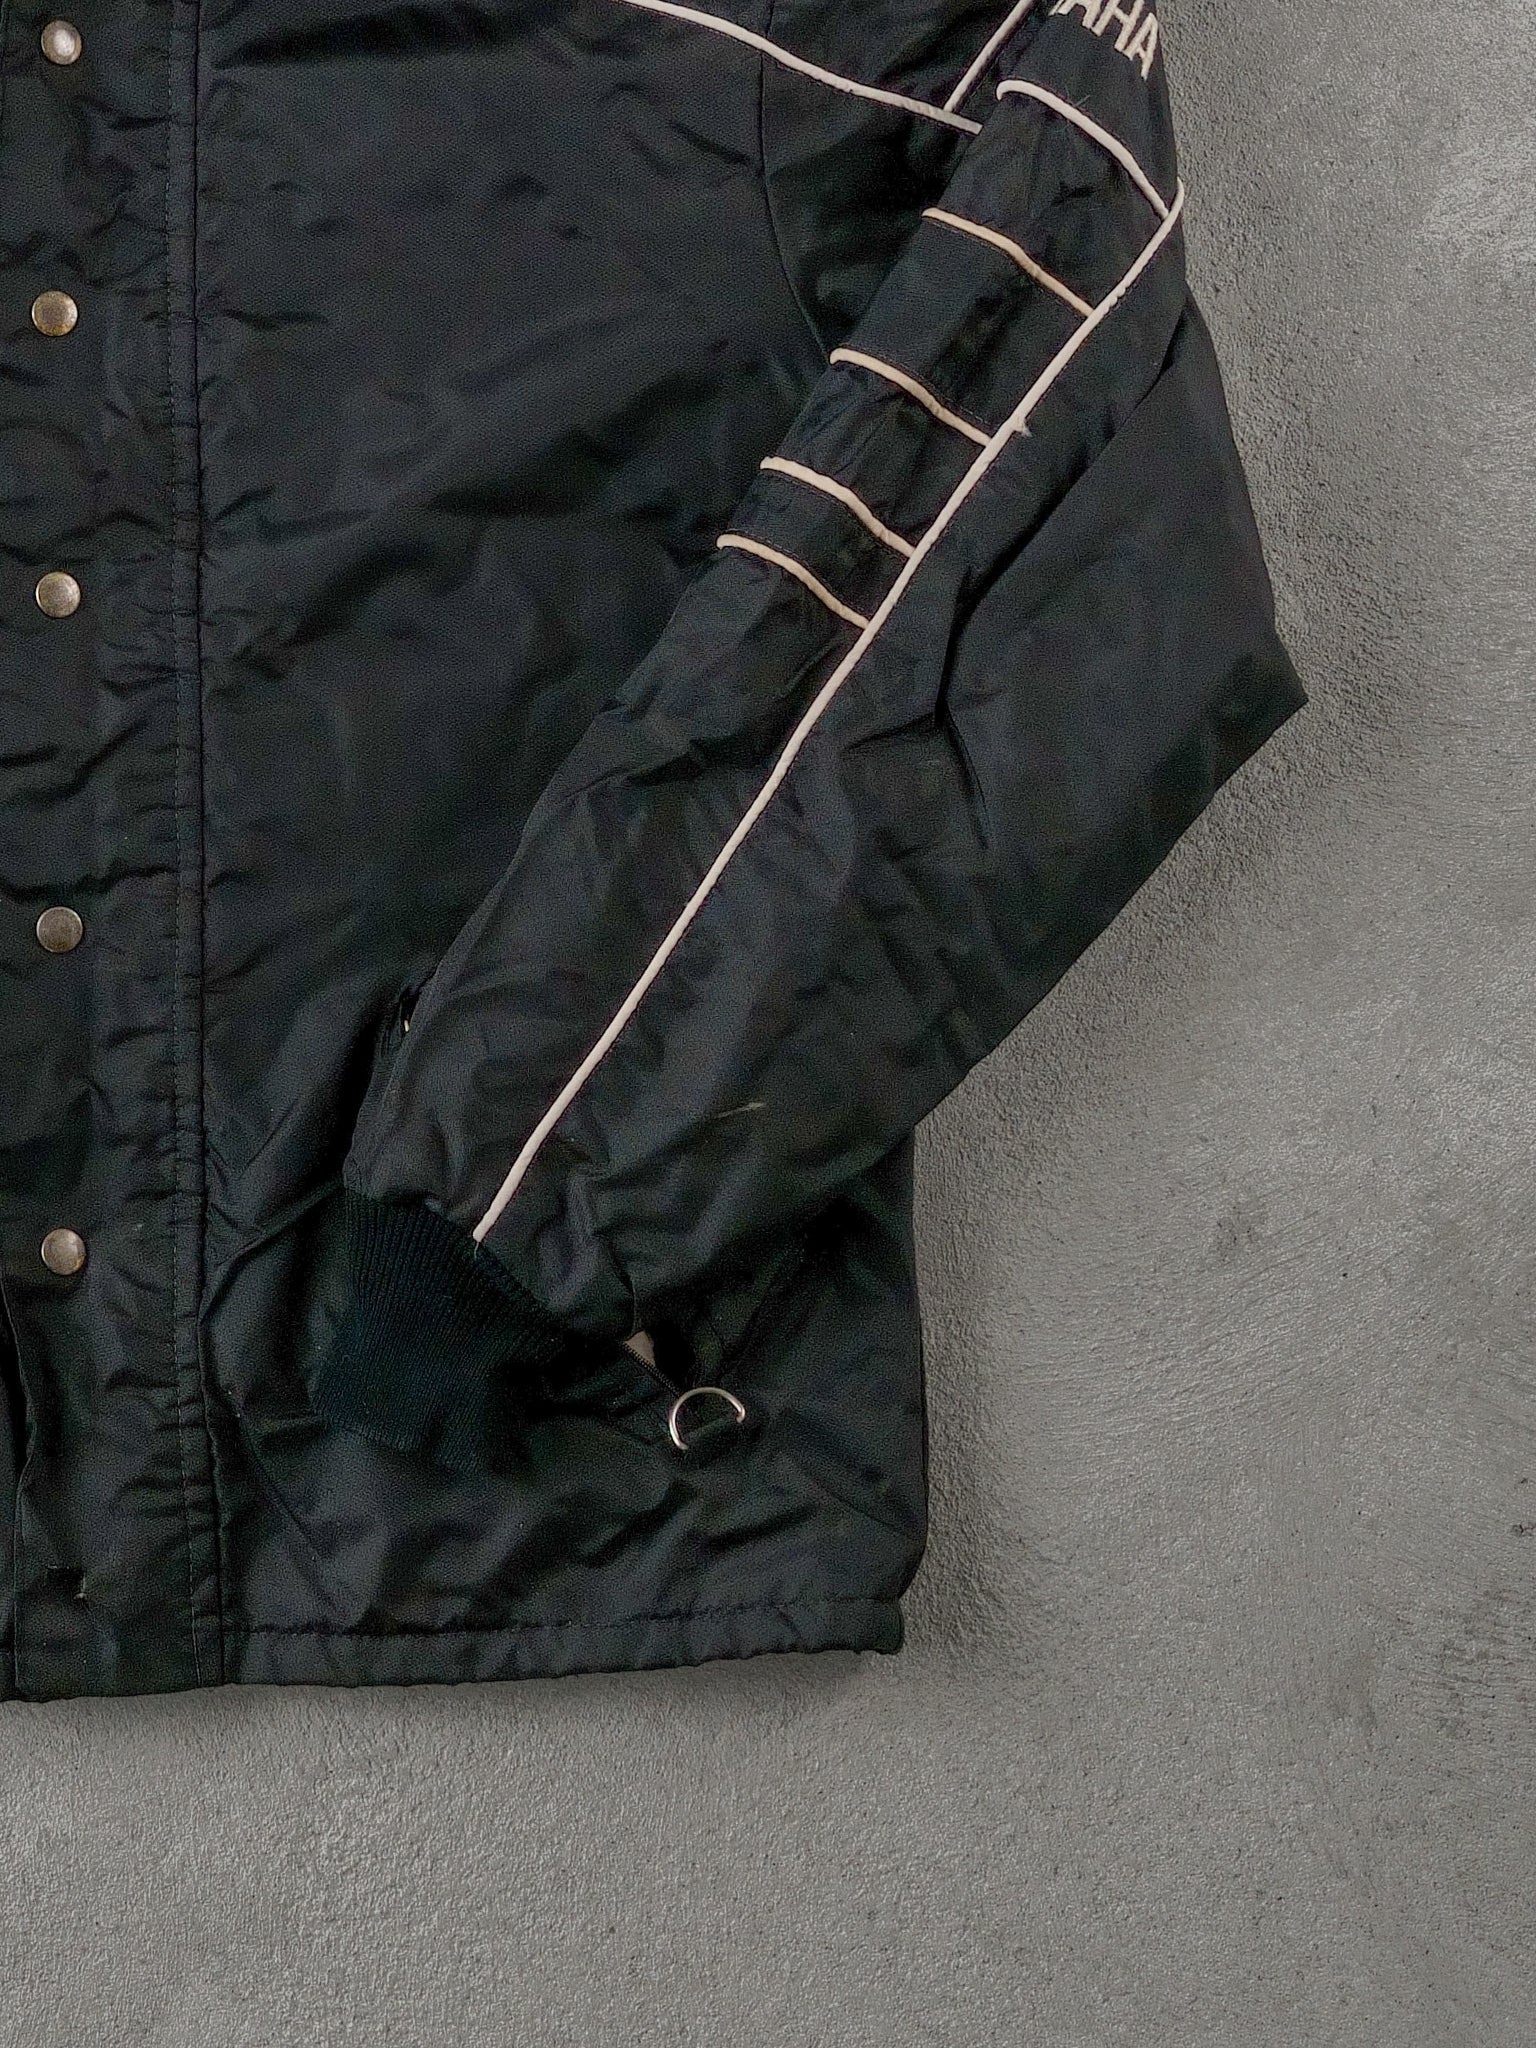 Vintage 90s Black Yamaha Collared Jacket (M)